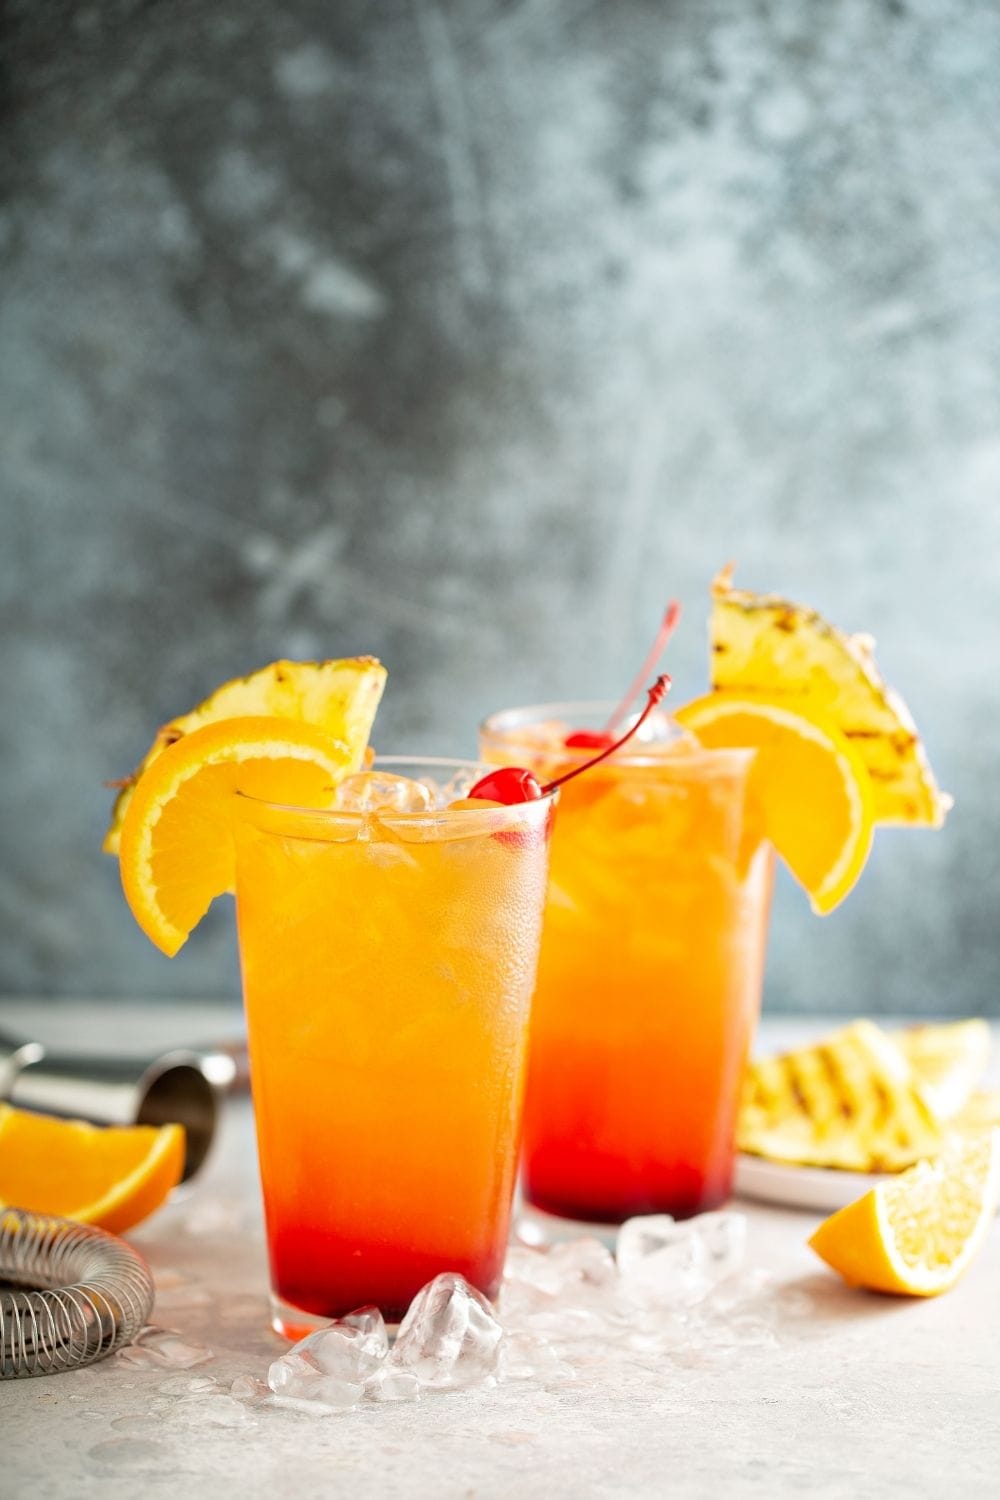 Refreshing Tequila Sunrise with Fresh Pineapple, Orange and Cherry